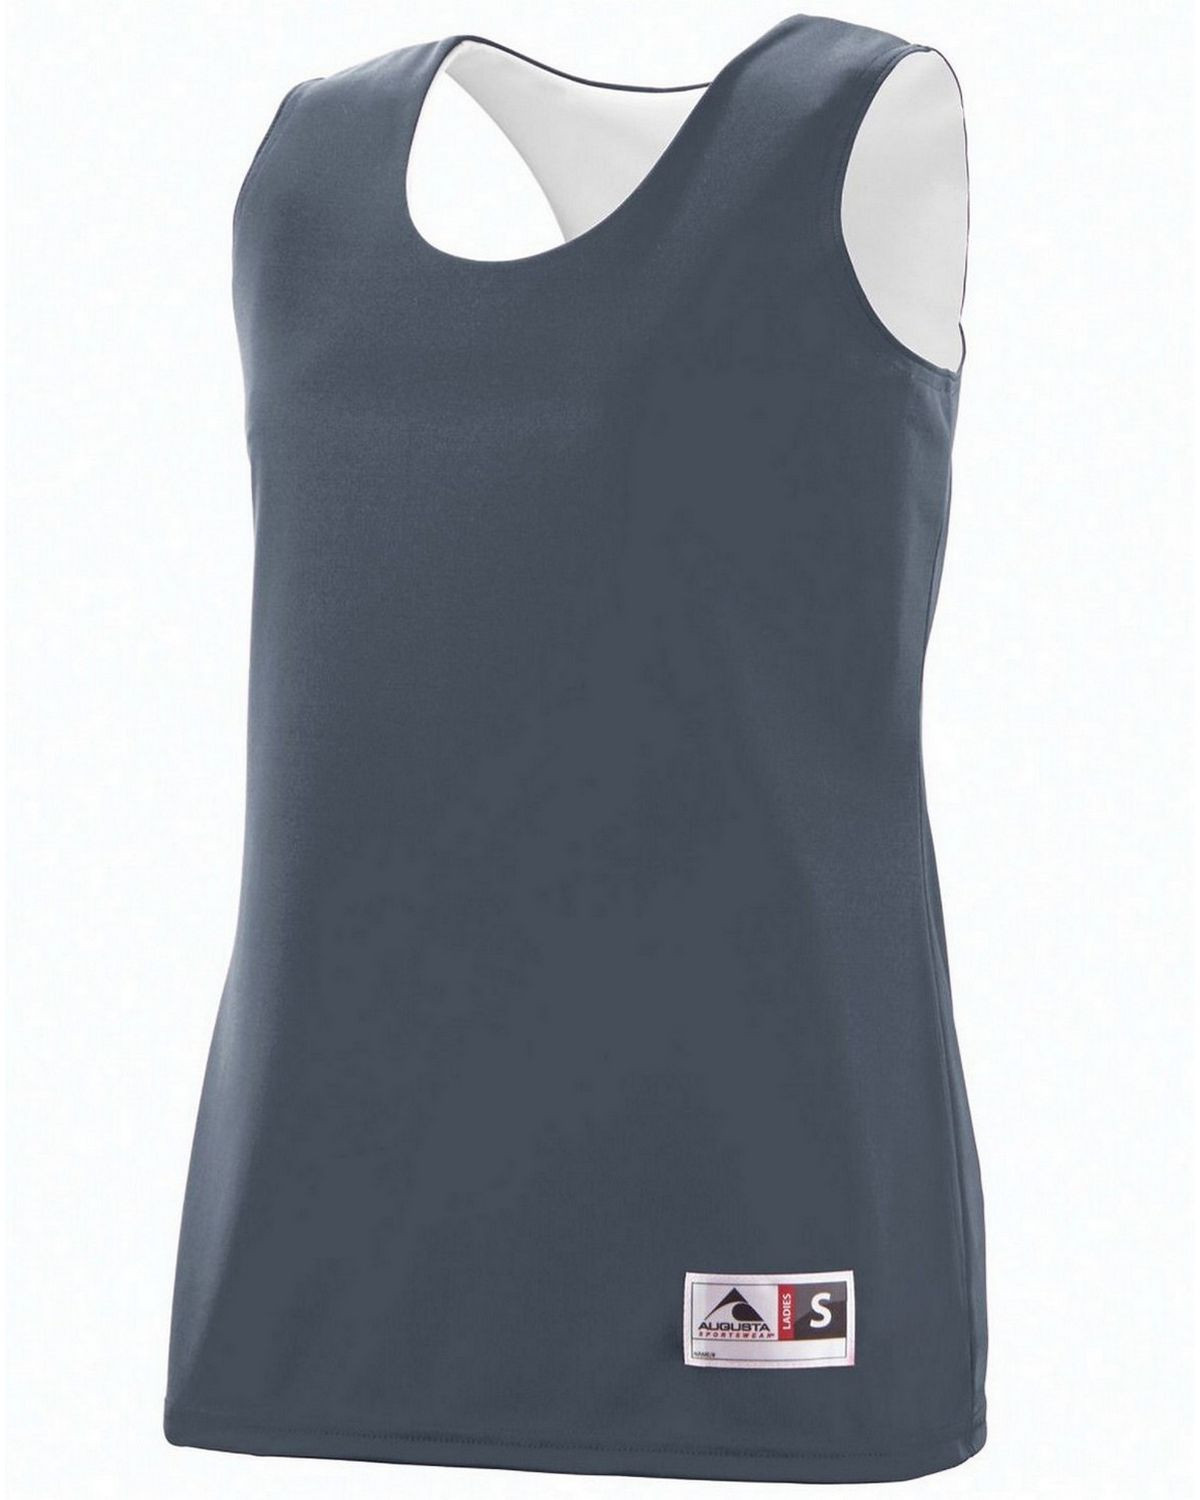 Augusta Sportswear 147 Women's Wicking Polyester Reversible Sleeveless Jersey - Graphite/White - S #sleeveless